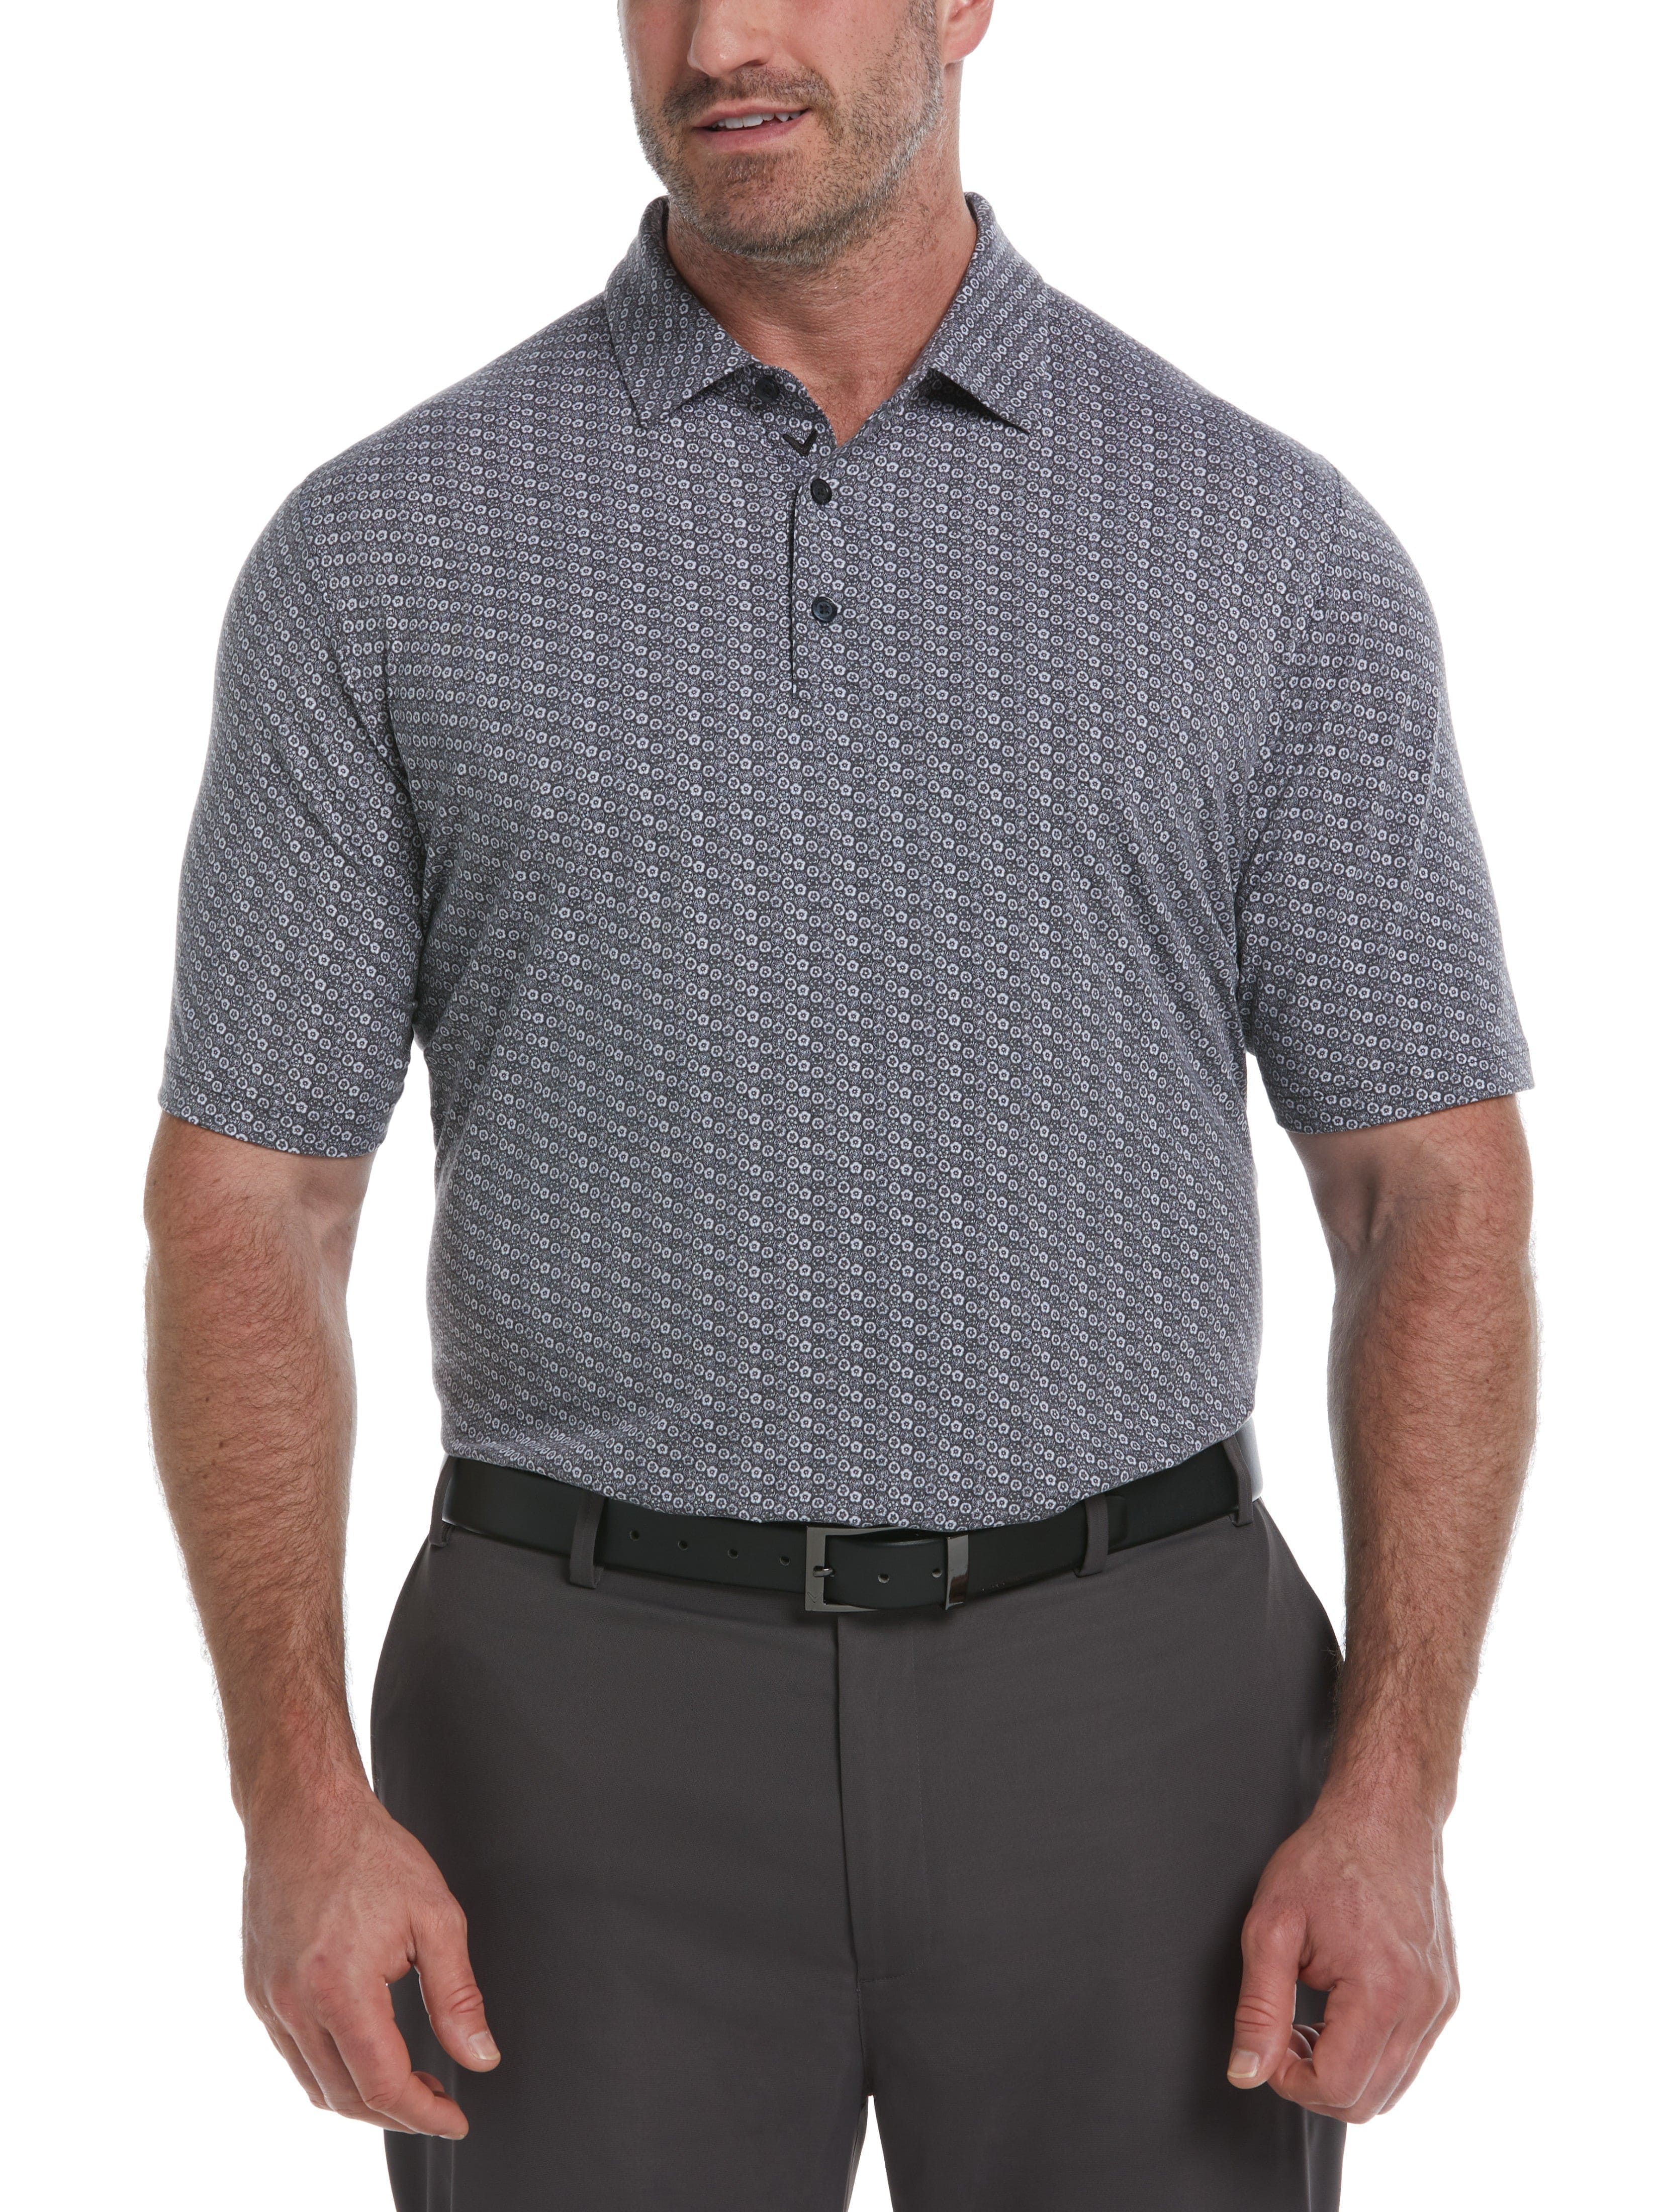 Callaway Apparel Mens Big & Tall Allover Tie Dye Foulard Print Golf Polo Shirt, Size 2X, Black, Polyester/Cotton/Elastane | Golf Apparel Shop